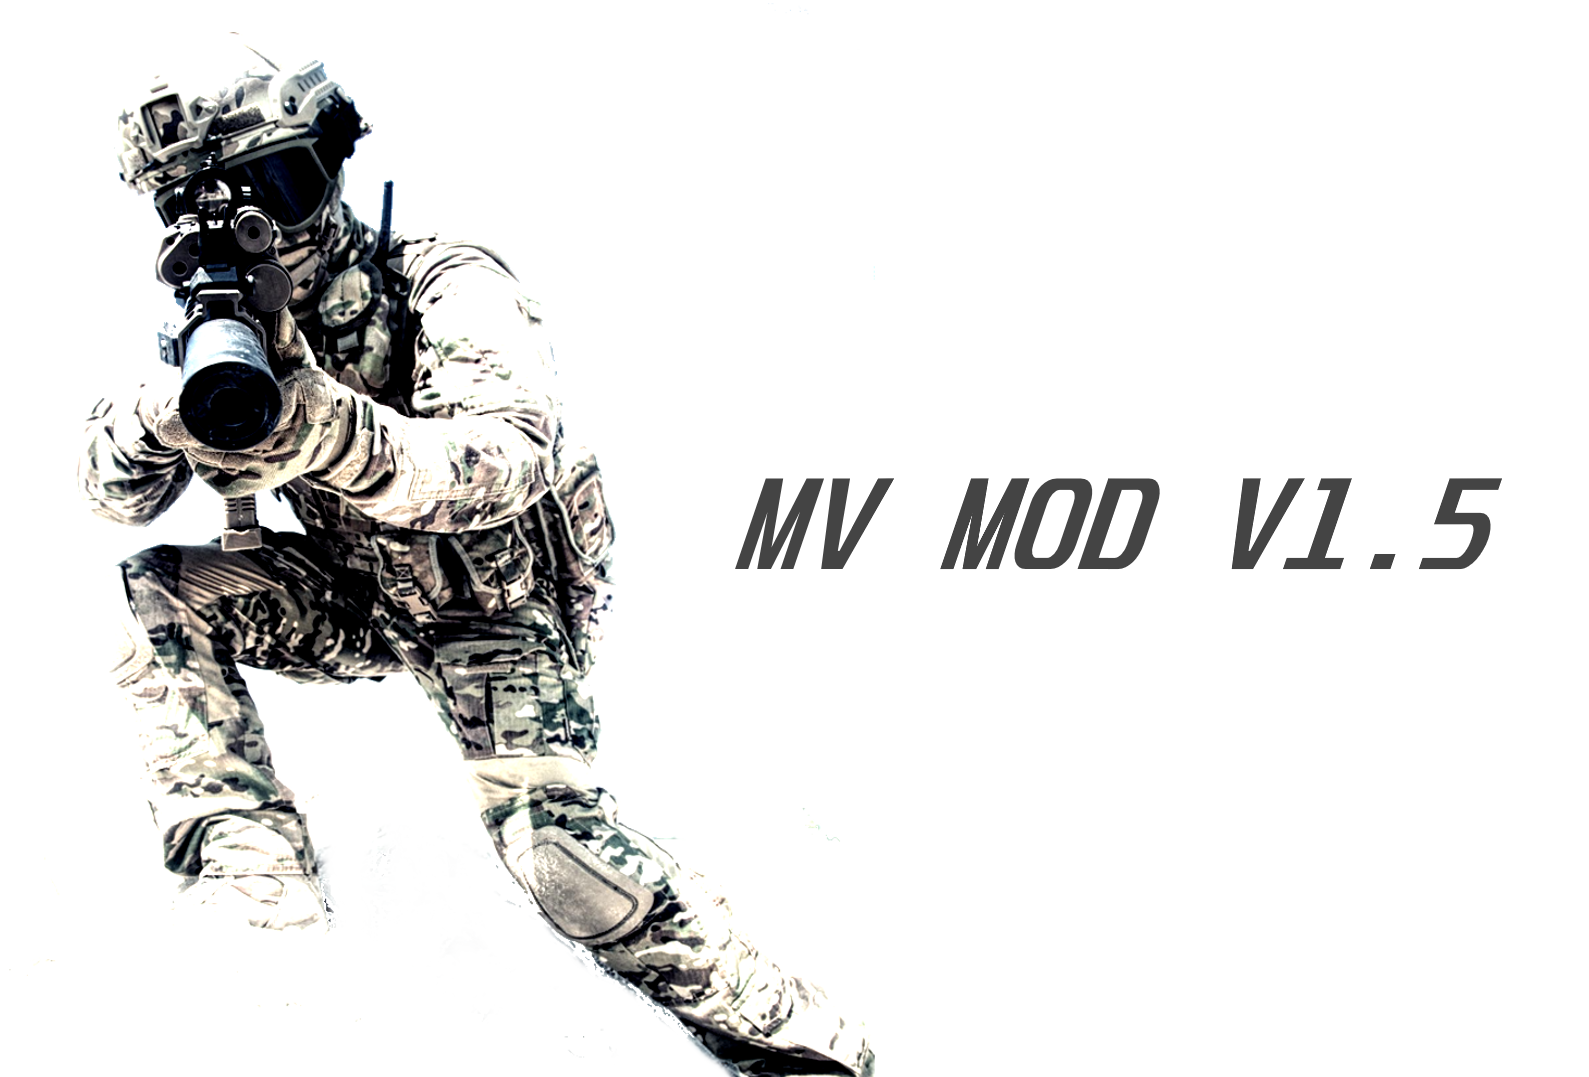 MVMOD V1.5